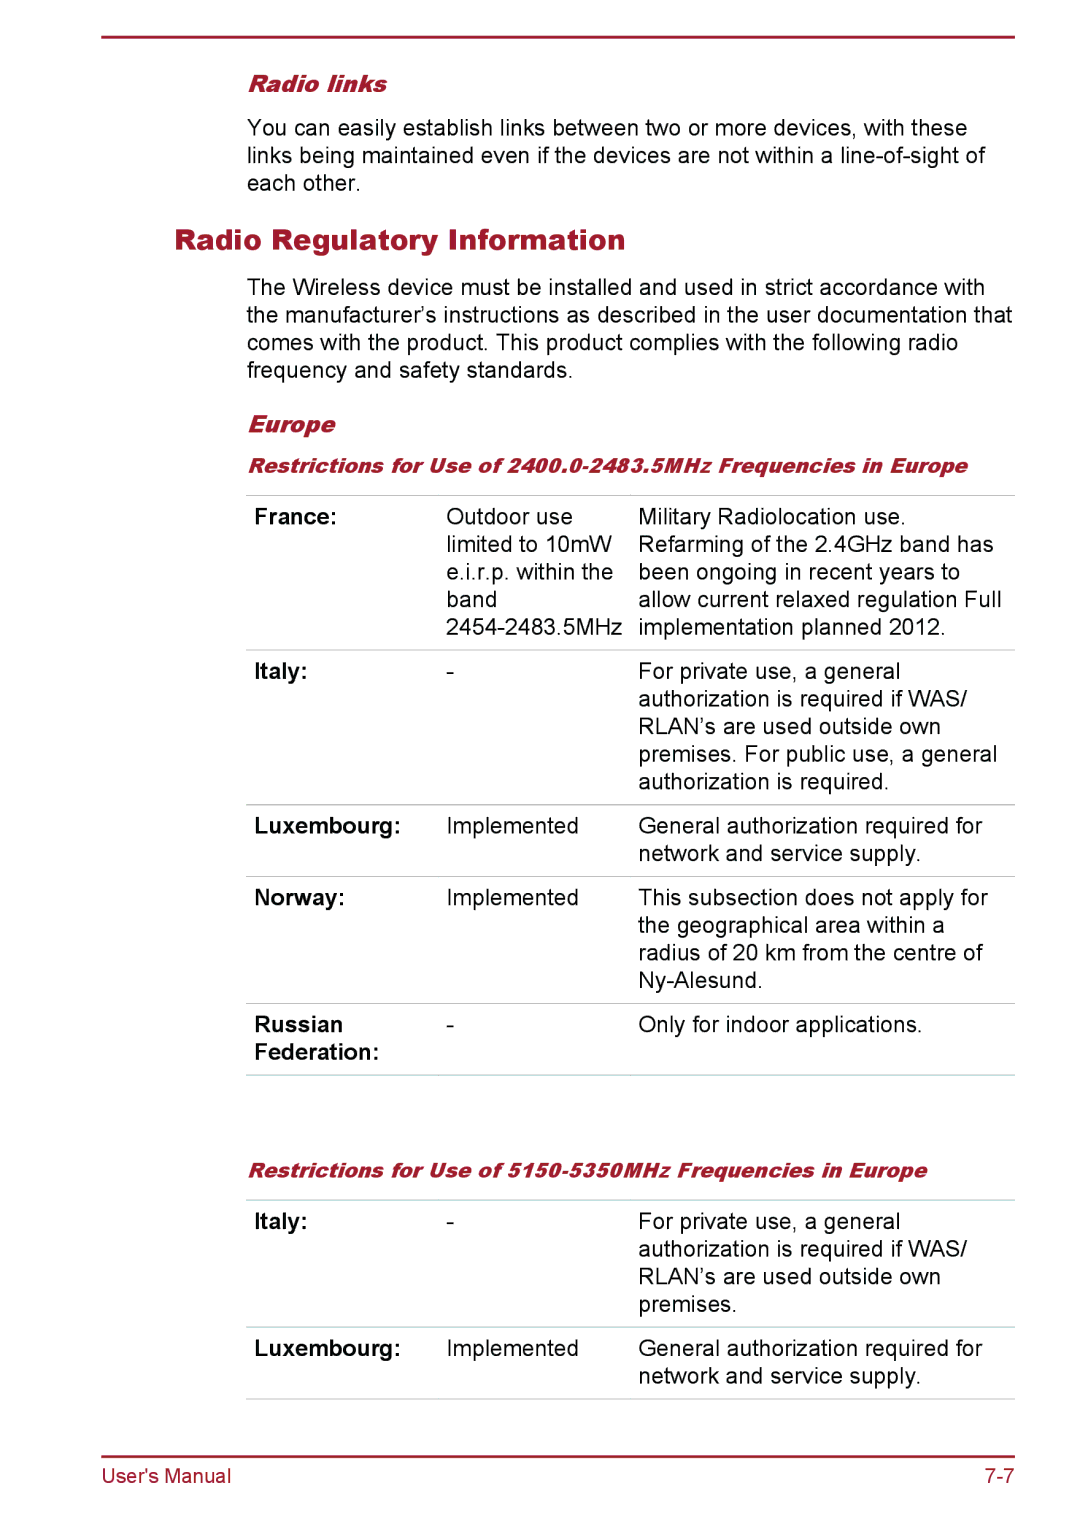 Toshiba WT8-A Series user manual Radio Regulatory Information, Radio links, Europe 